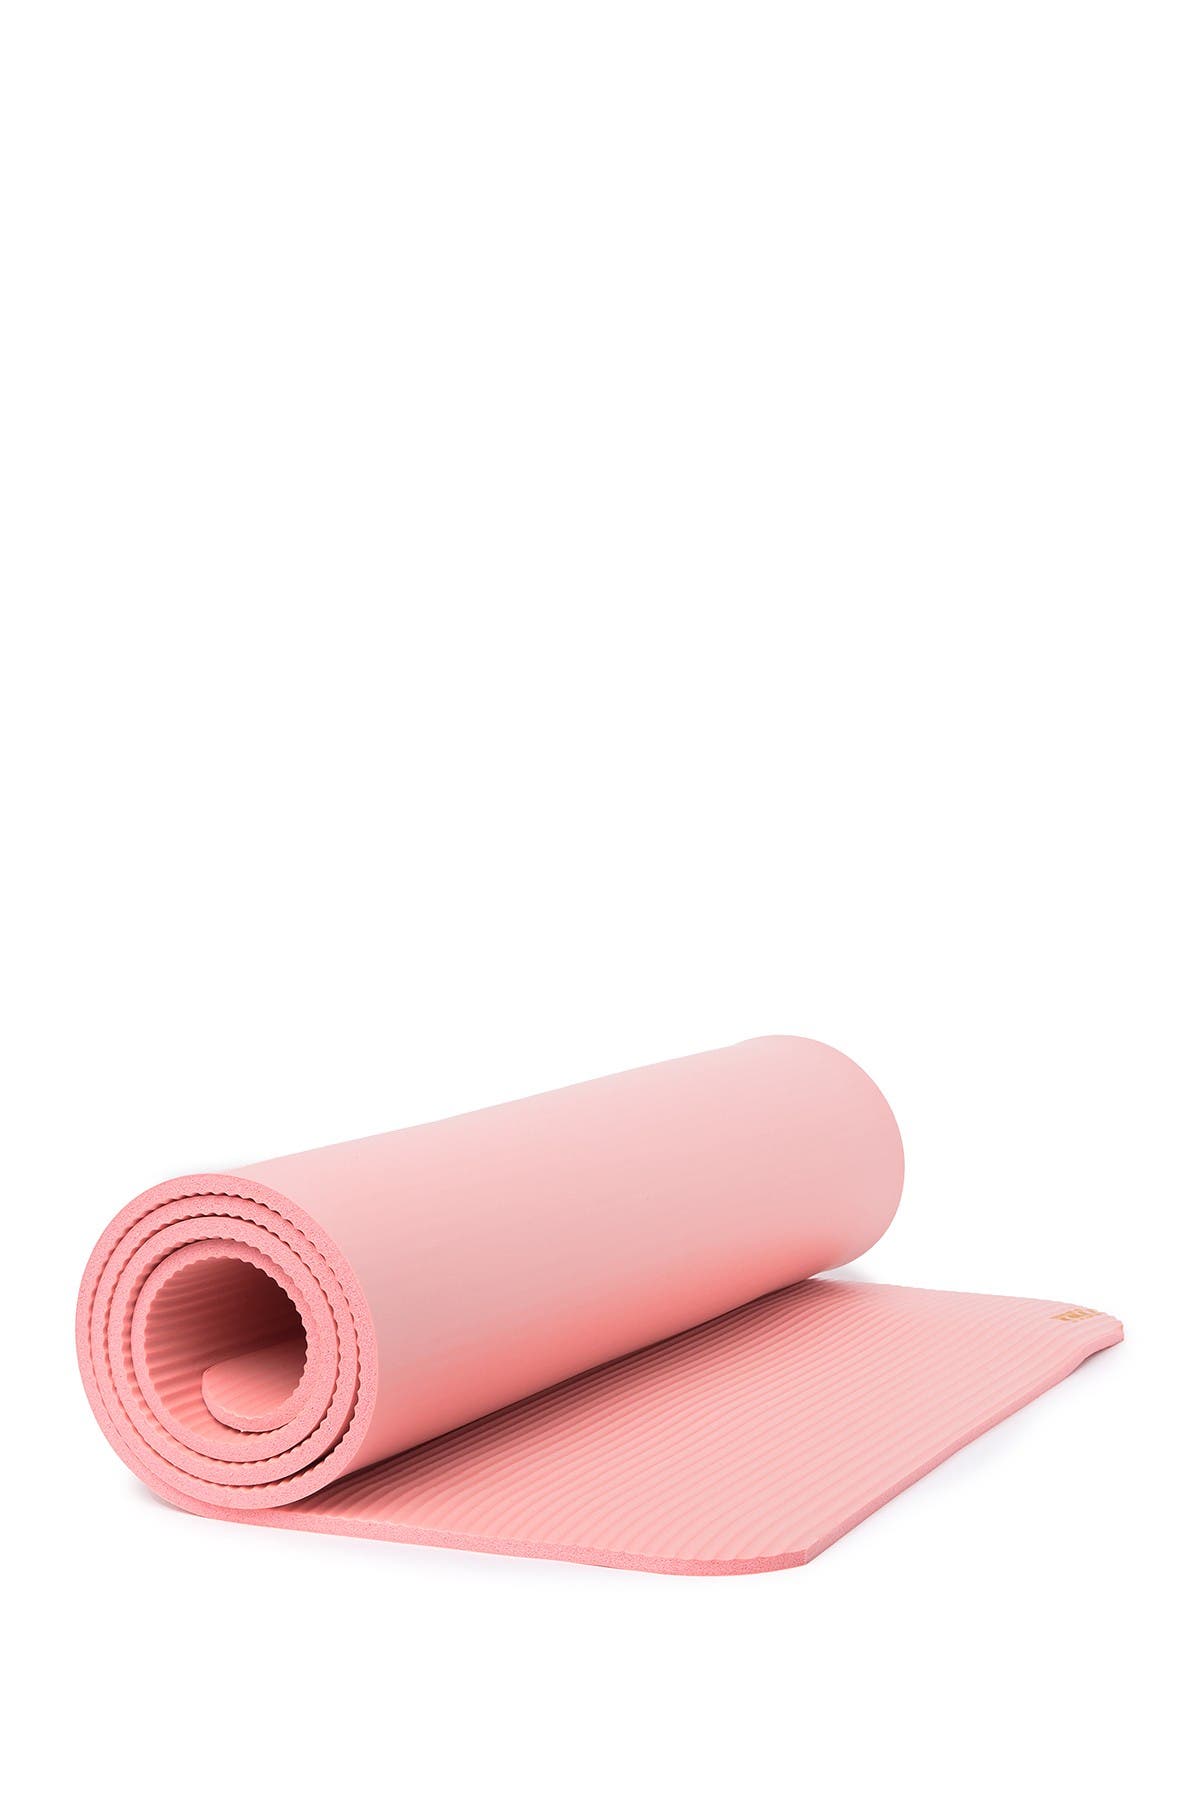 tko 10mm exercise mat w sling pink nordstrom rack